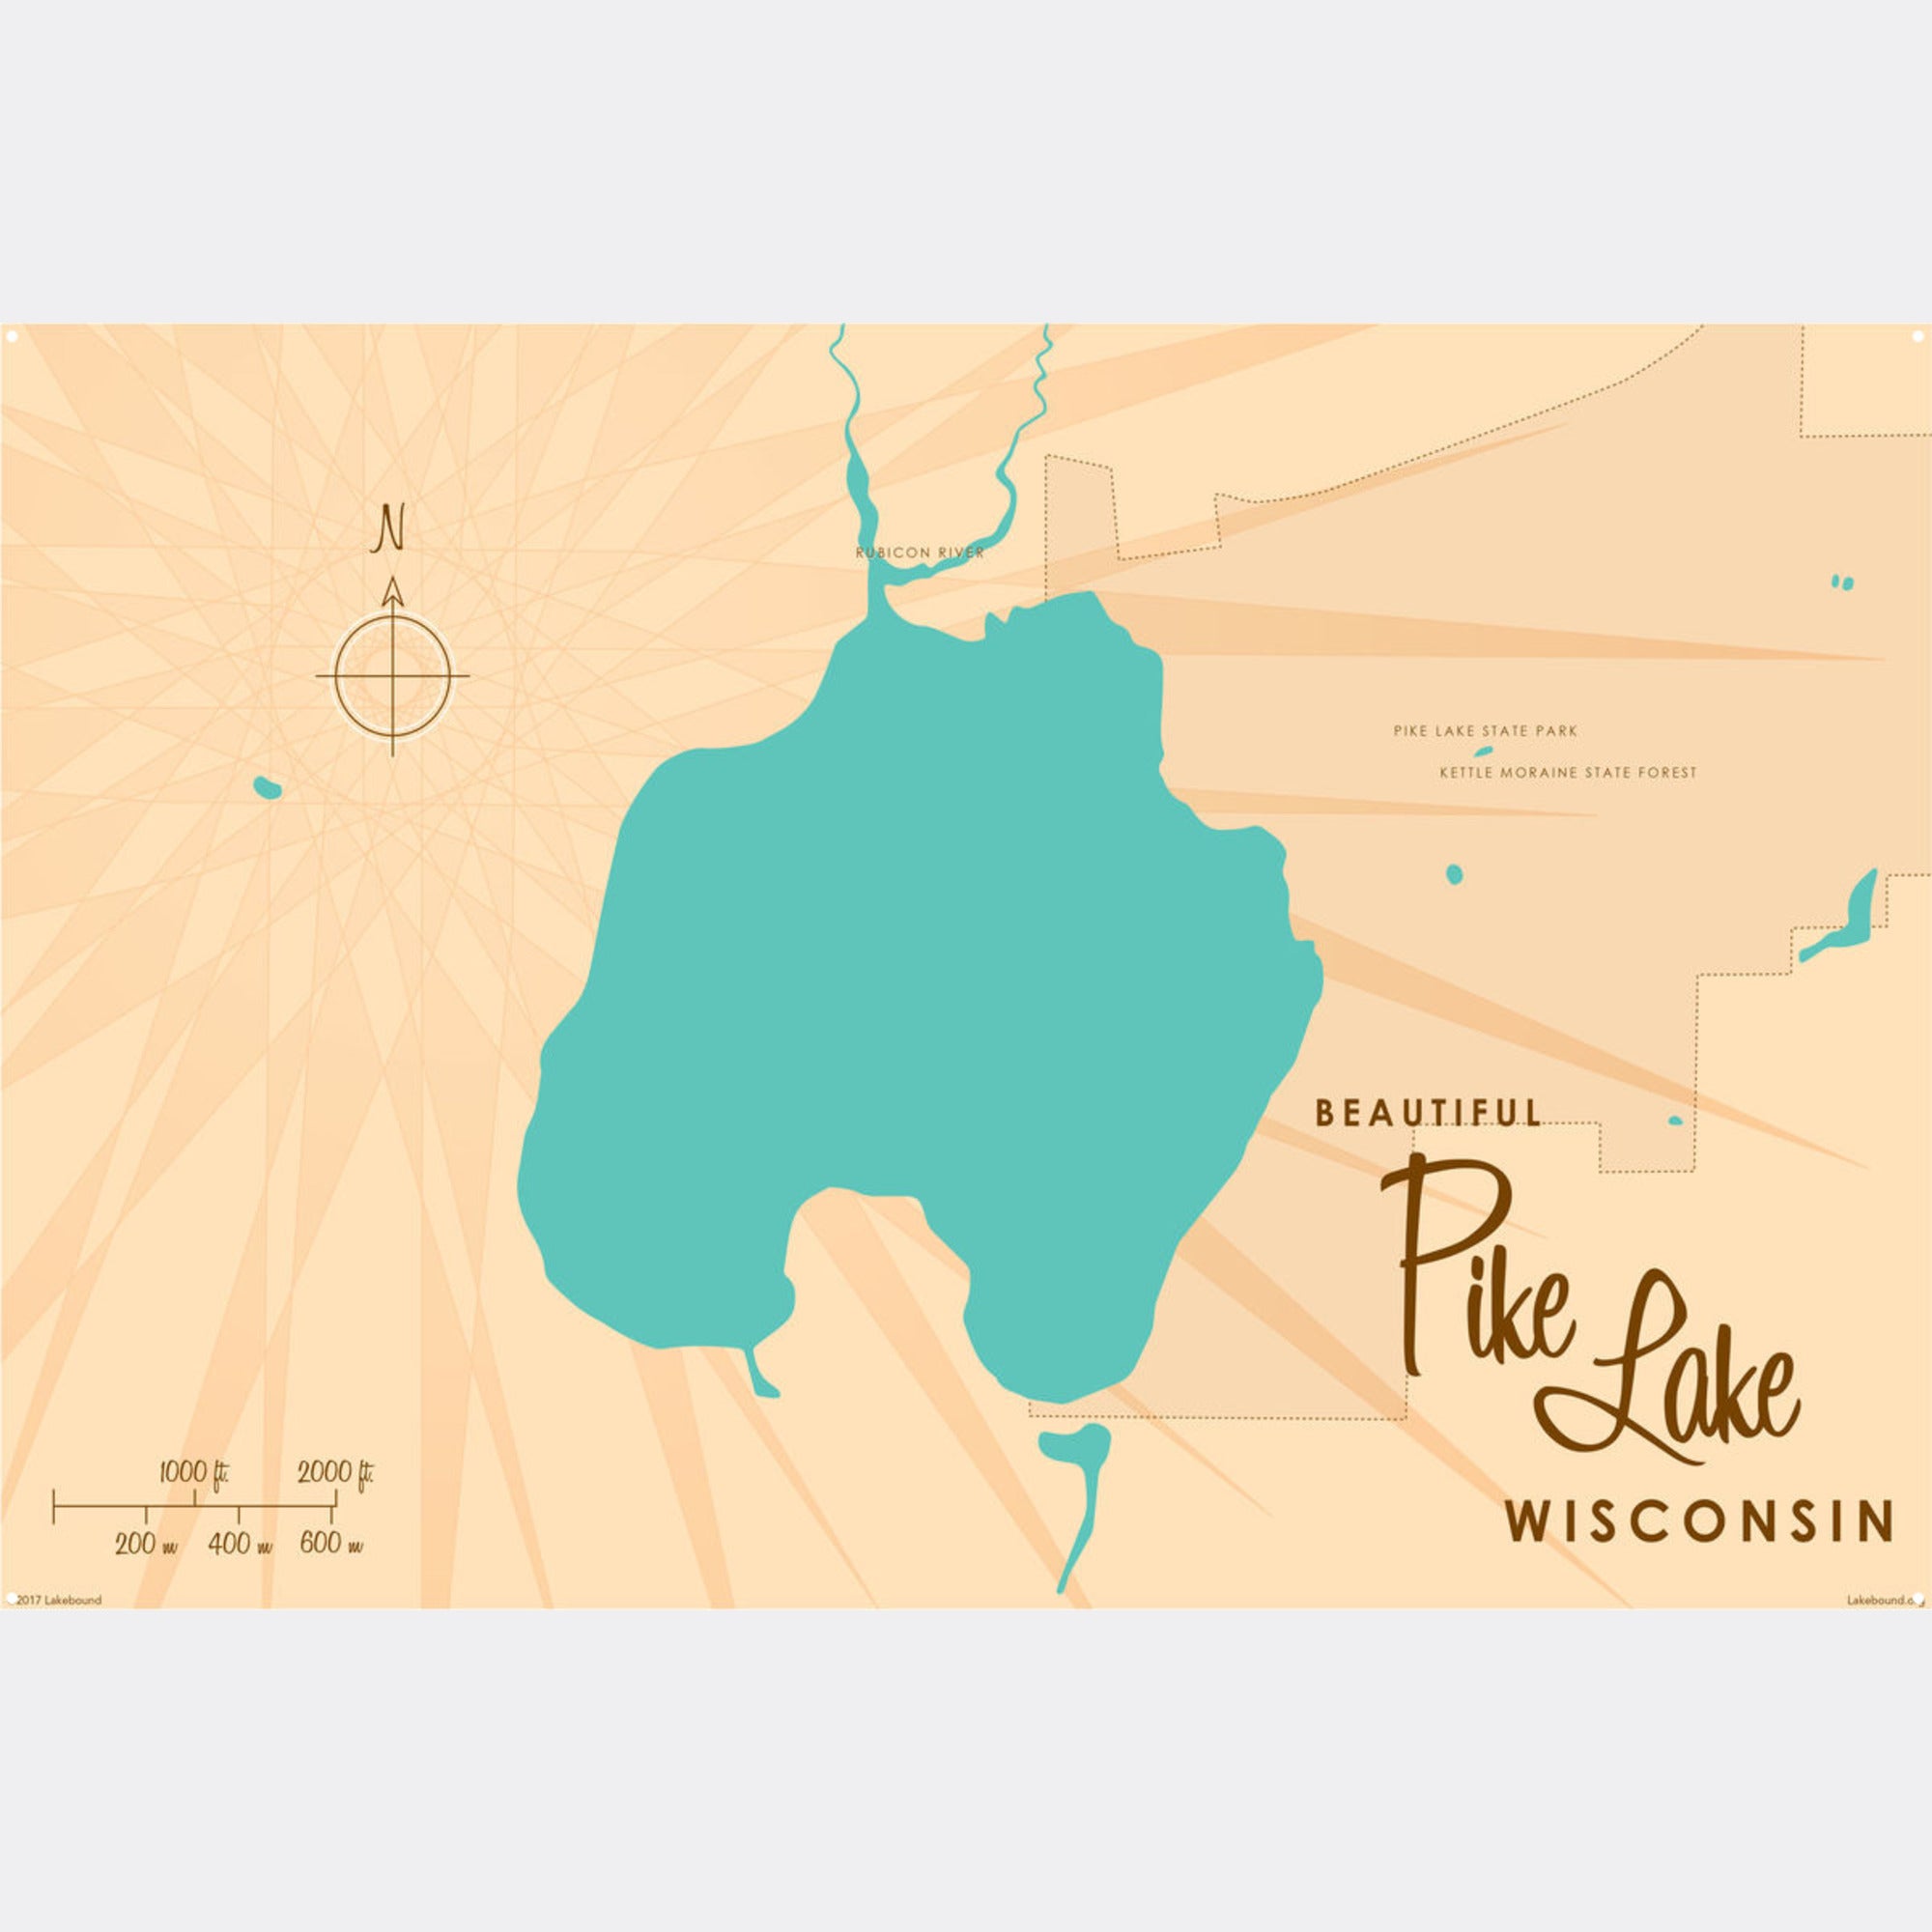 Pike Lake Wisconsin, Metal Sign Map Art